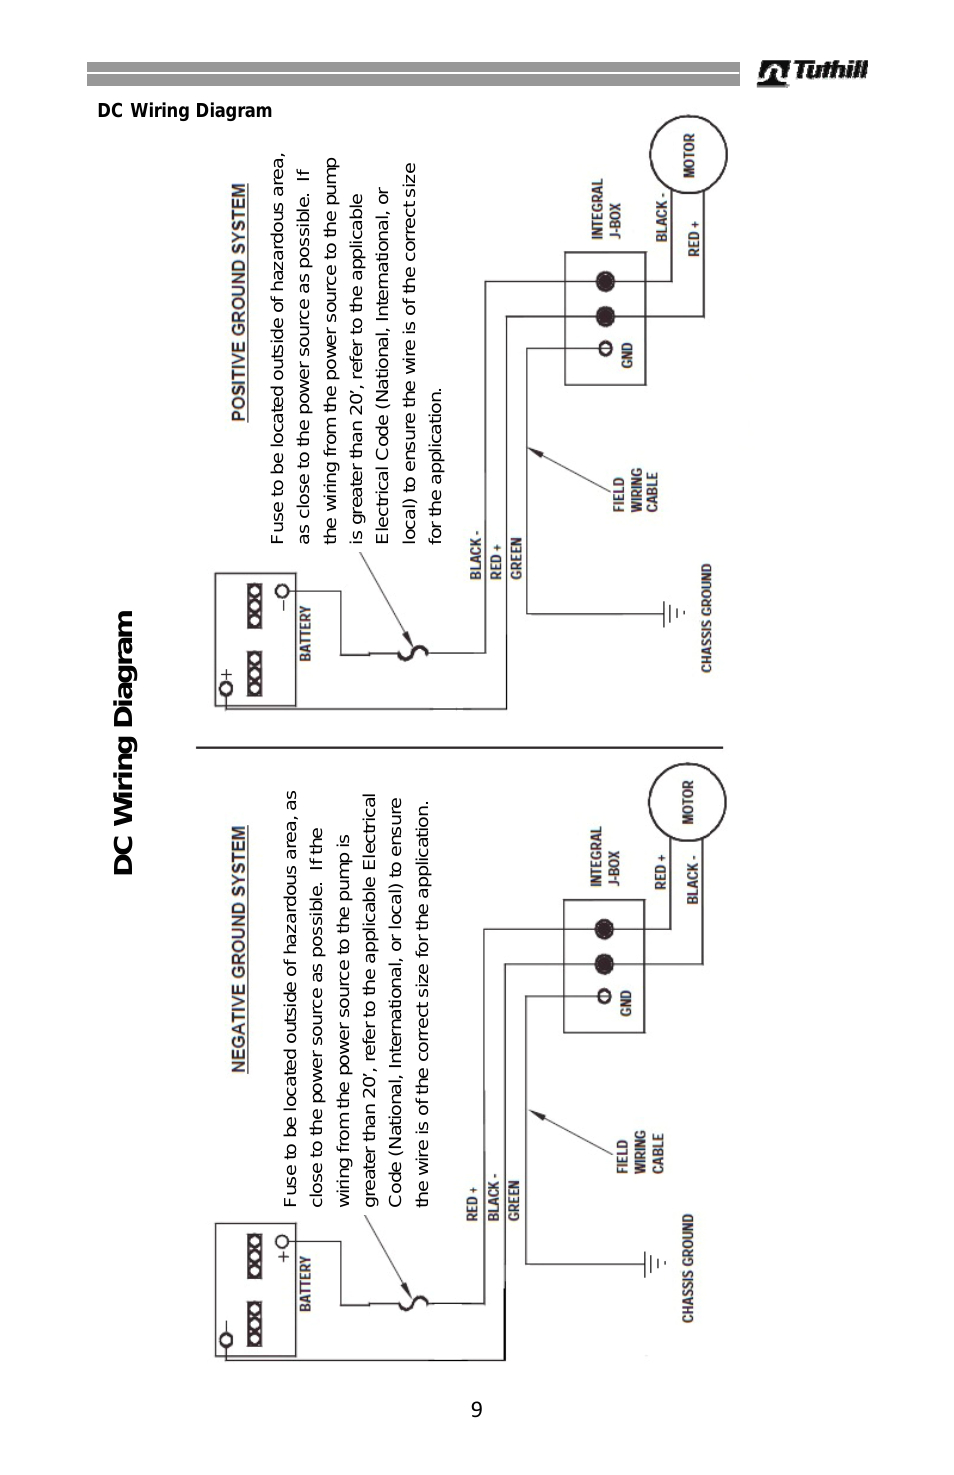 dc wiring diagram fill rite fr600g series ac transfer pumps userdc wiring diagram fill rite fr600g